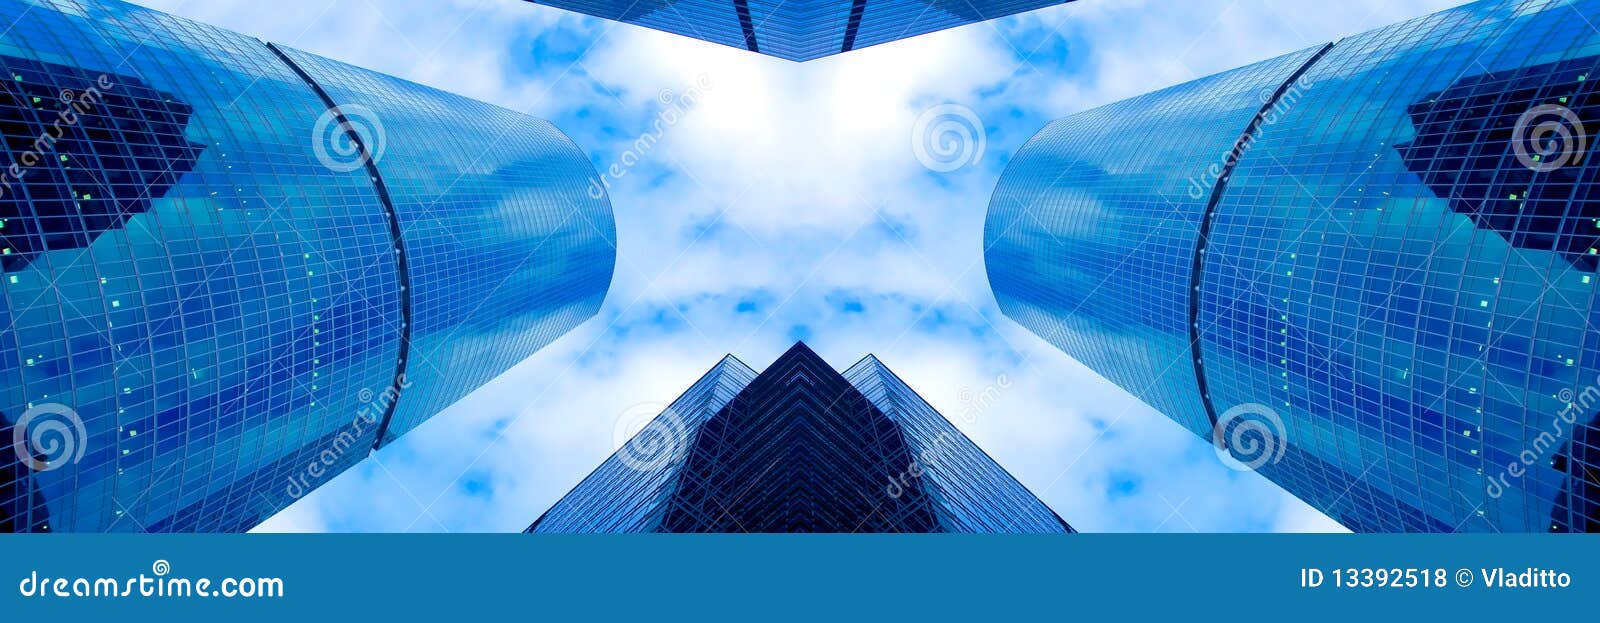 symmetric business skyscrapers